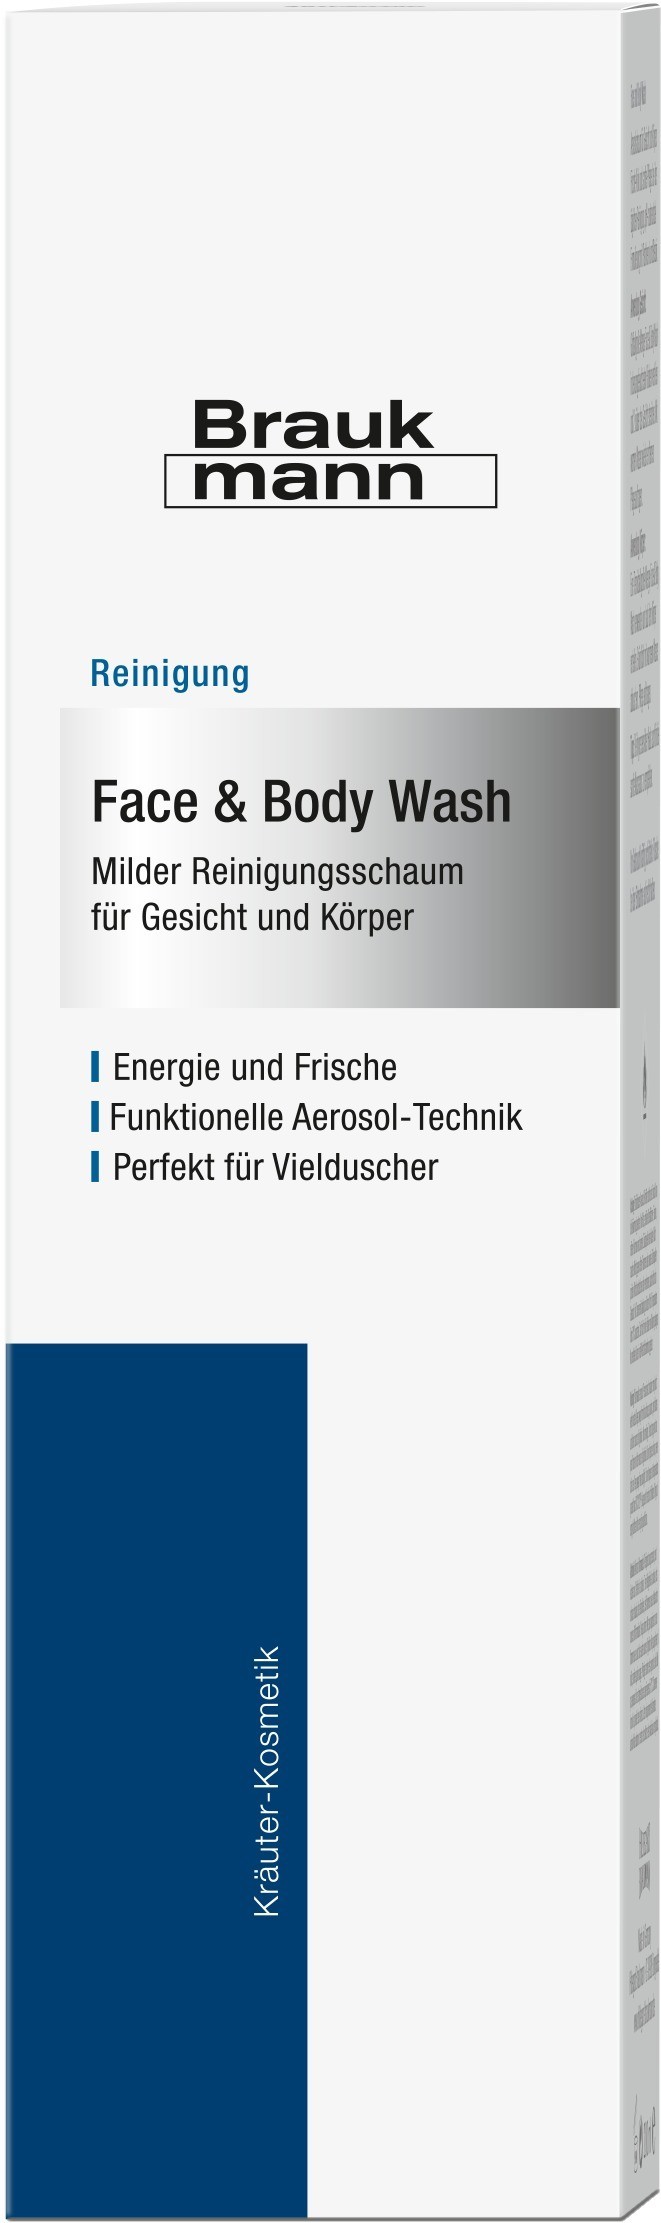 braukmann-face-body-wash